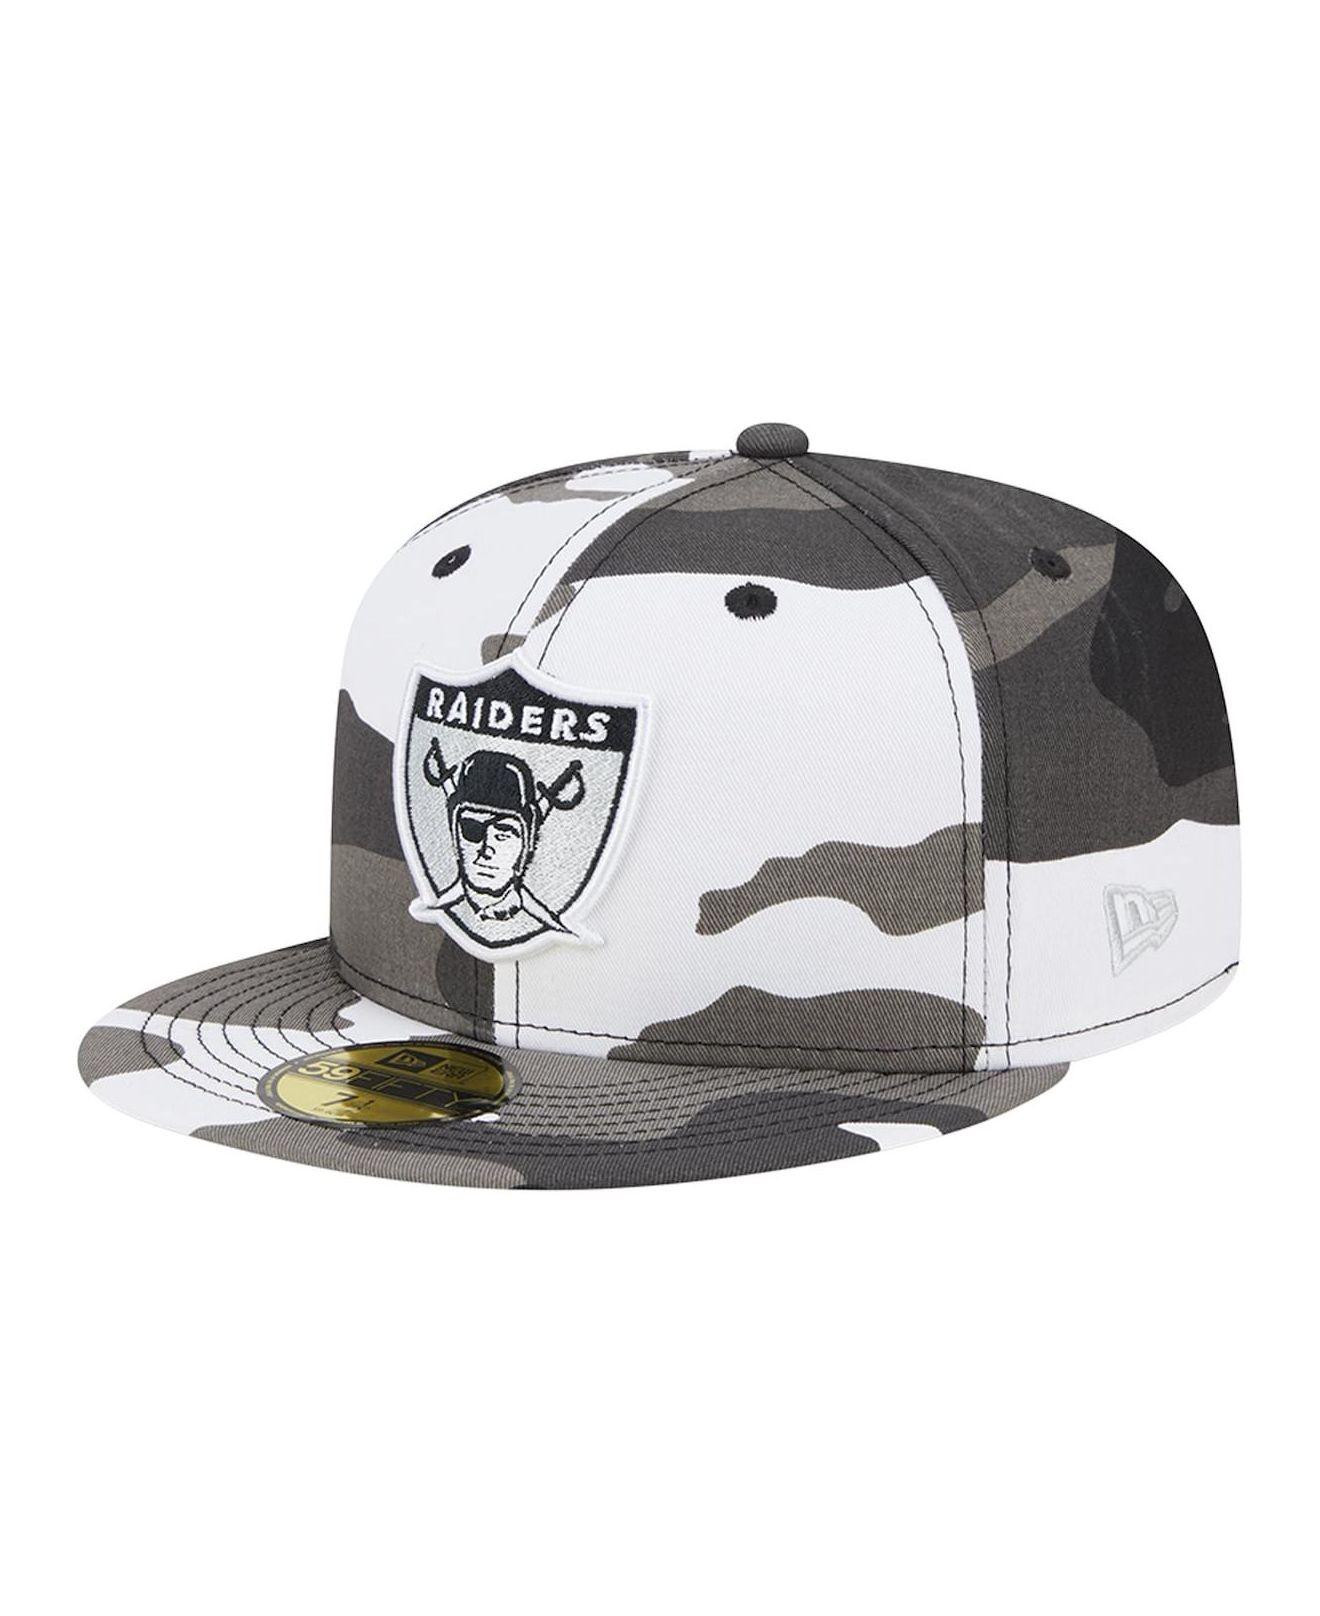 Lids Las Vegas Raiders New Era Retro 59FIFTY Fitted Hat - Cream